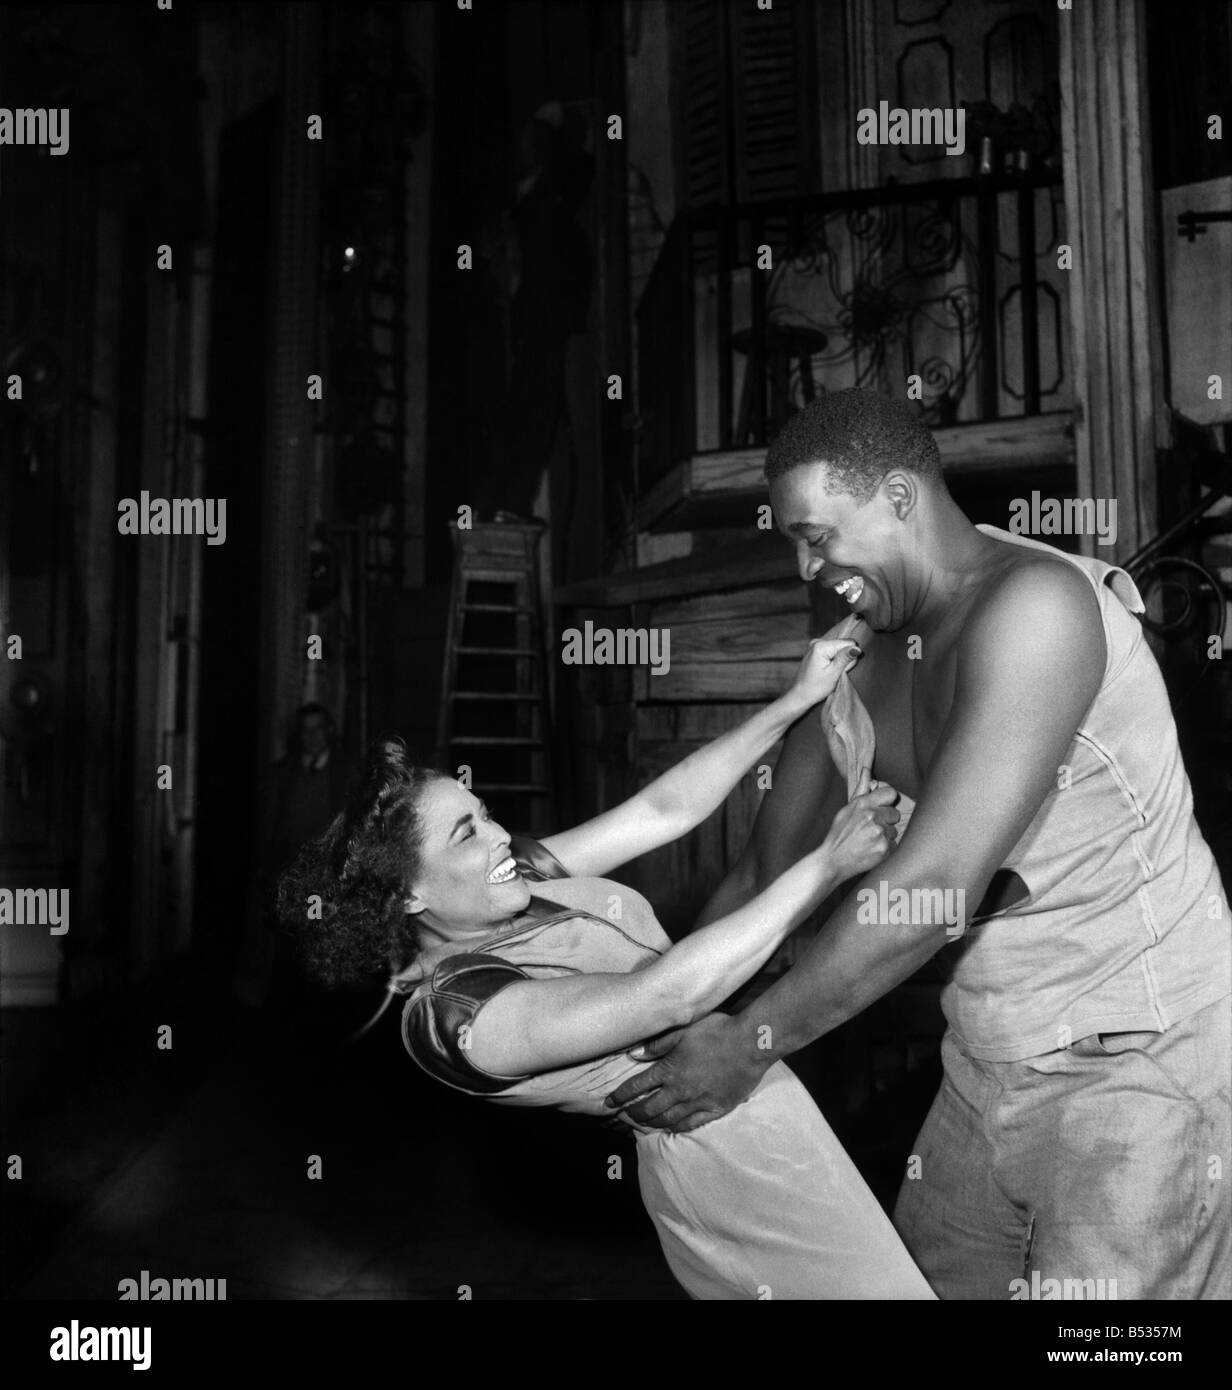 Porgy und Bess - Oper Urylle Leonardos und John McCurry. Oktober 1952 C5003 Stockfoto